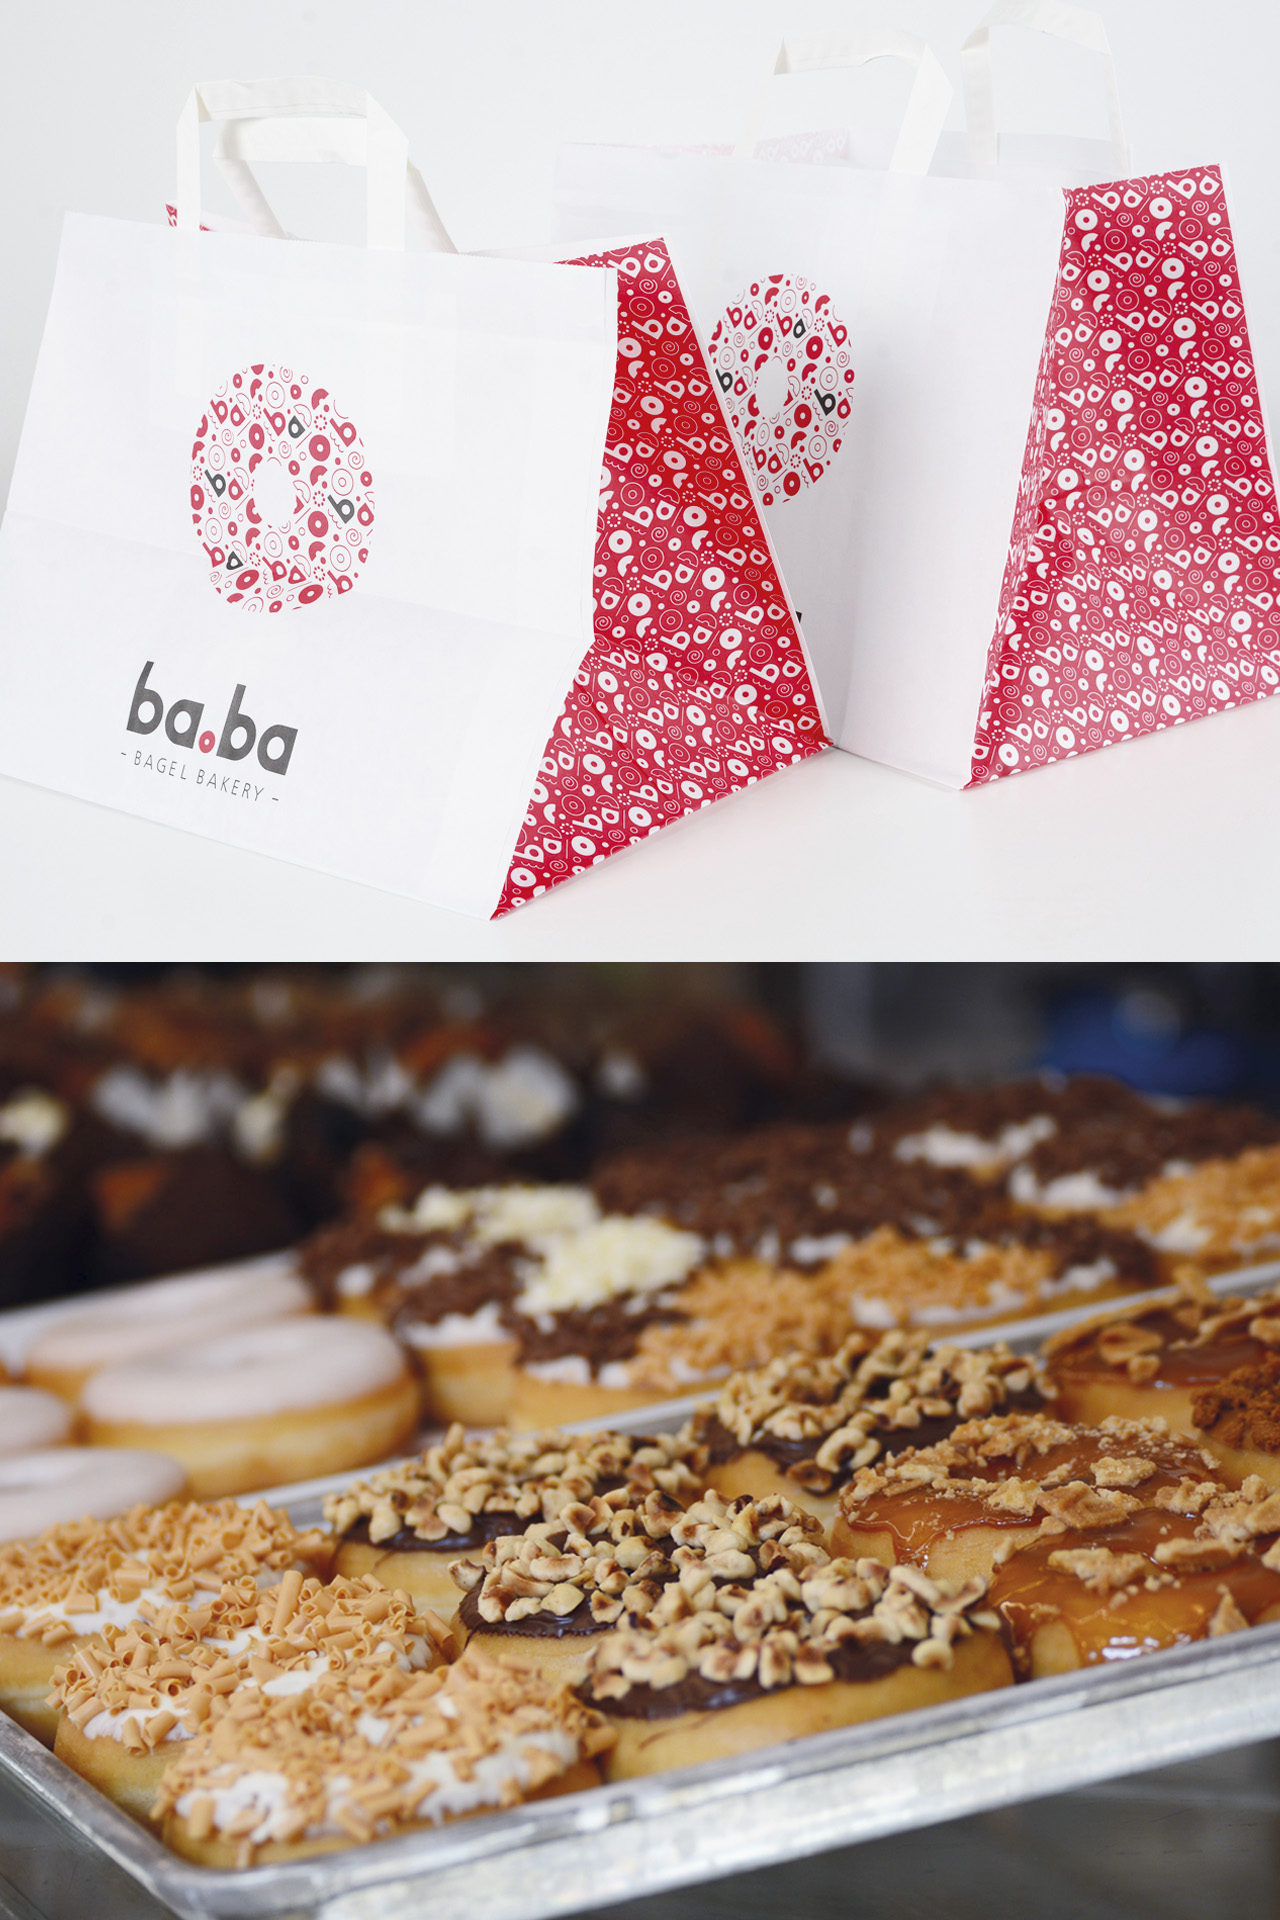 Ba.Ba bagel bakery, branding, graphics design, corporate identity by DesignRepublic branding & packaging design Belgium